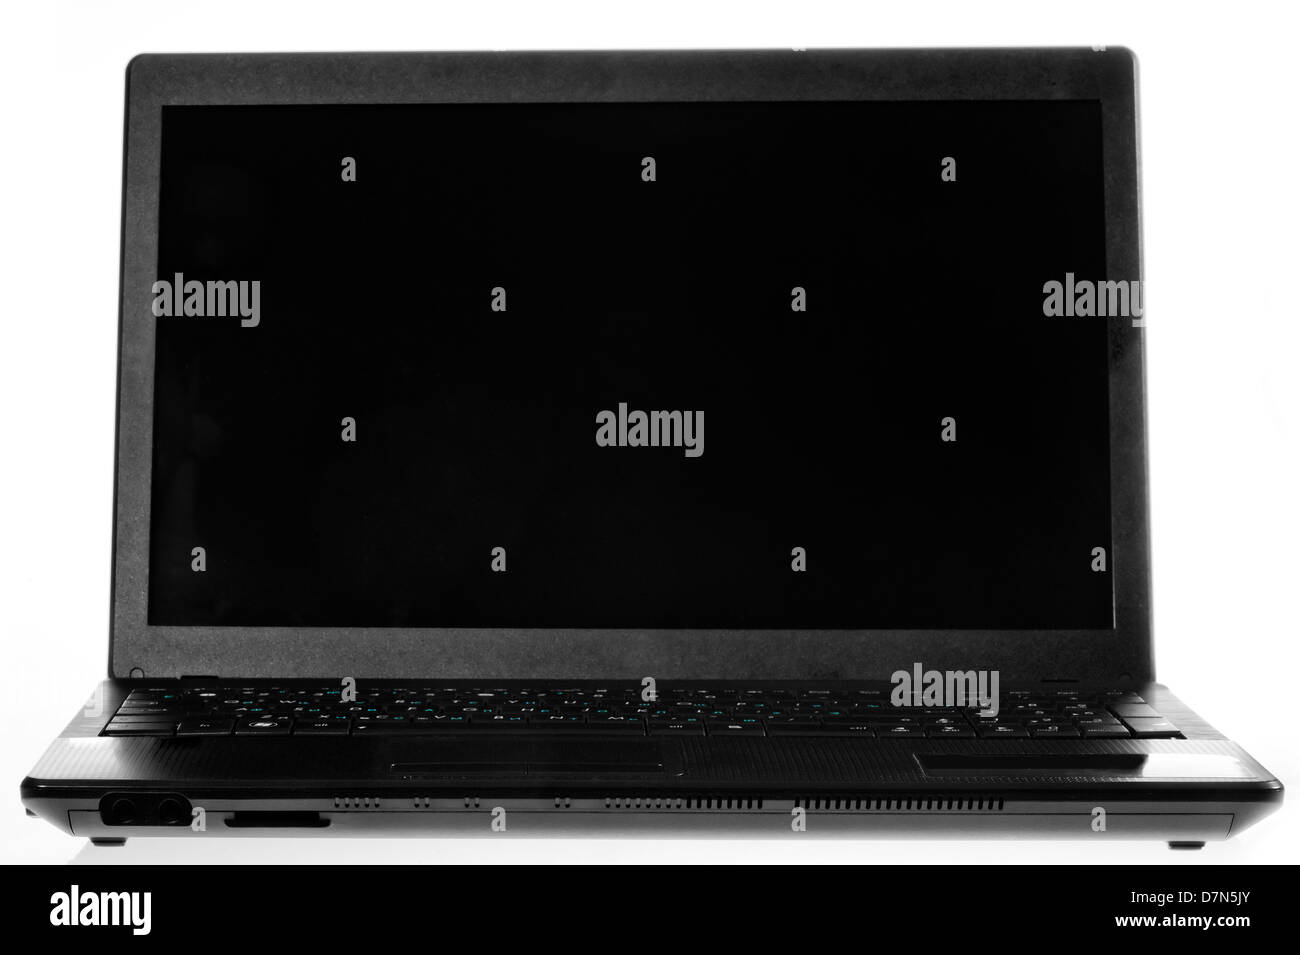 Black laptop open on a white background. Stock Photo